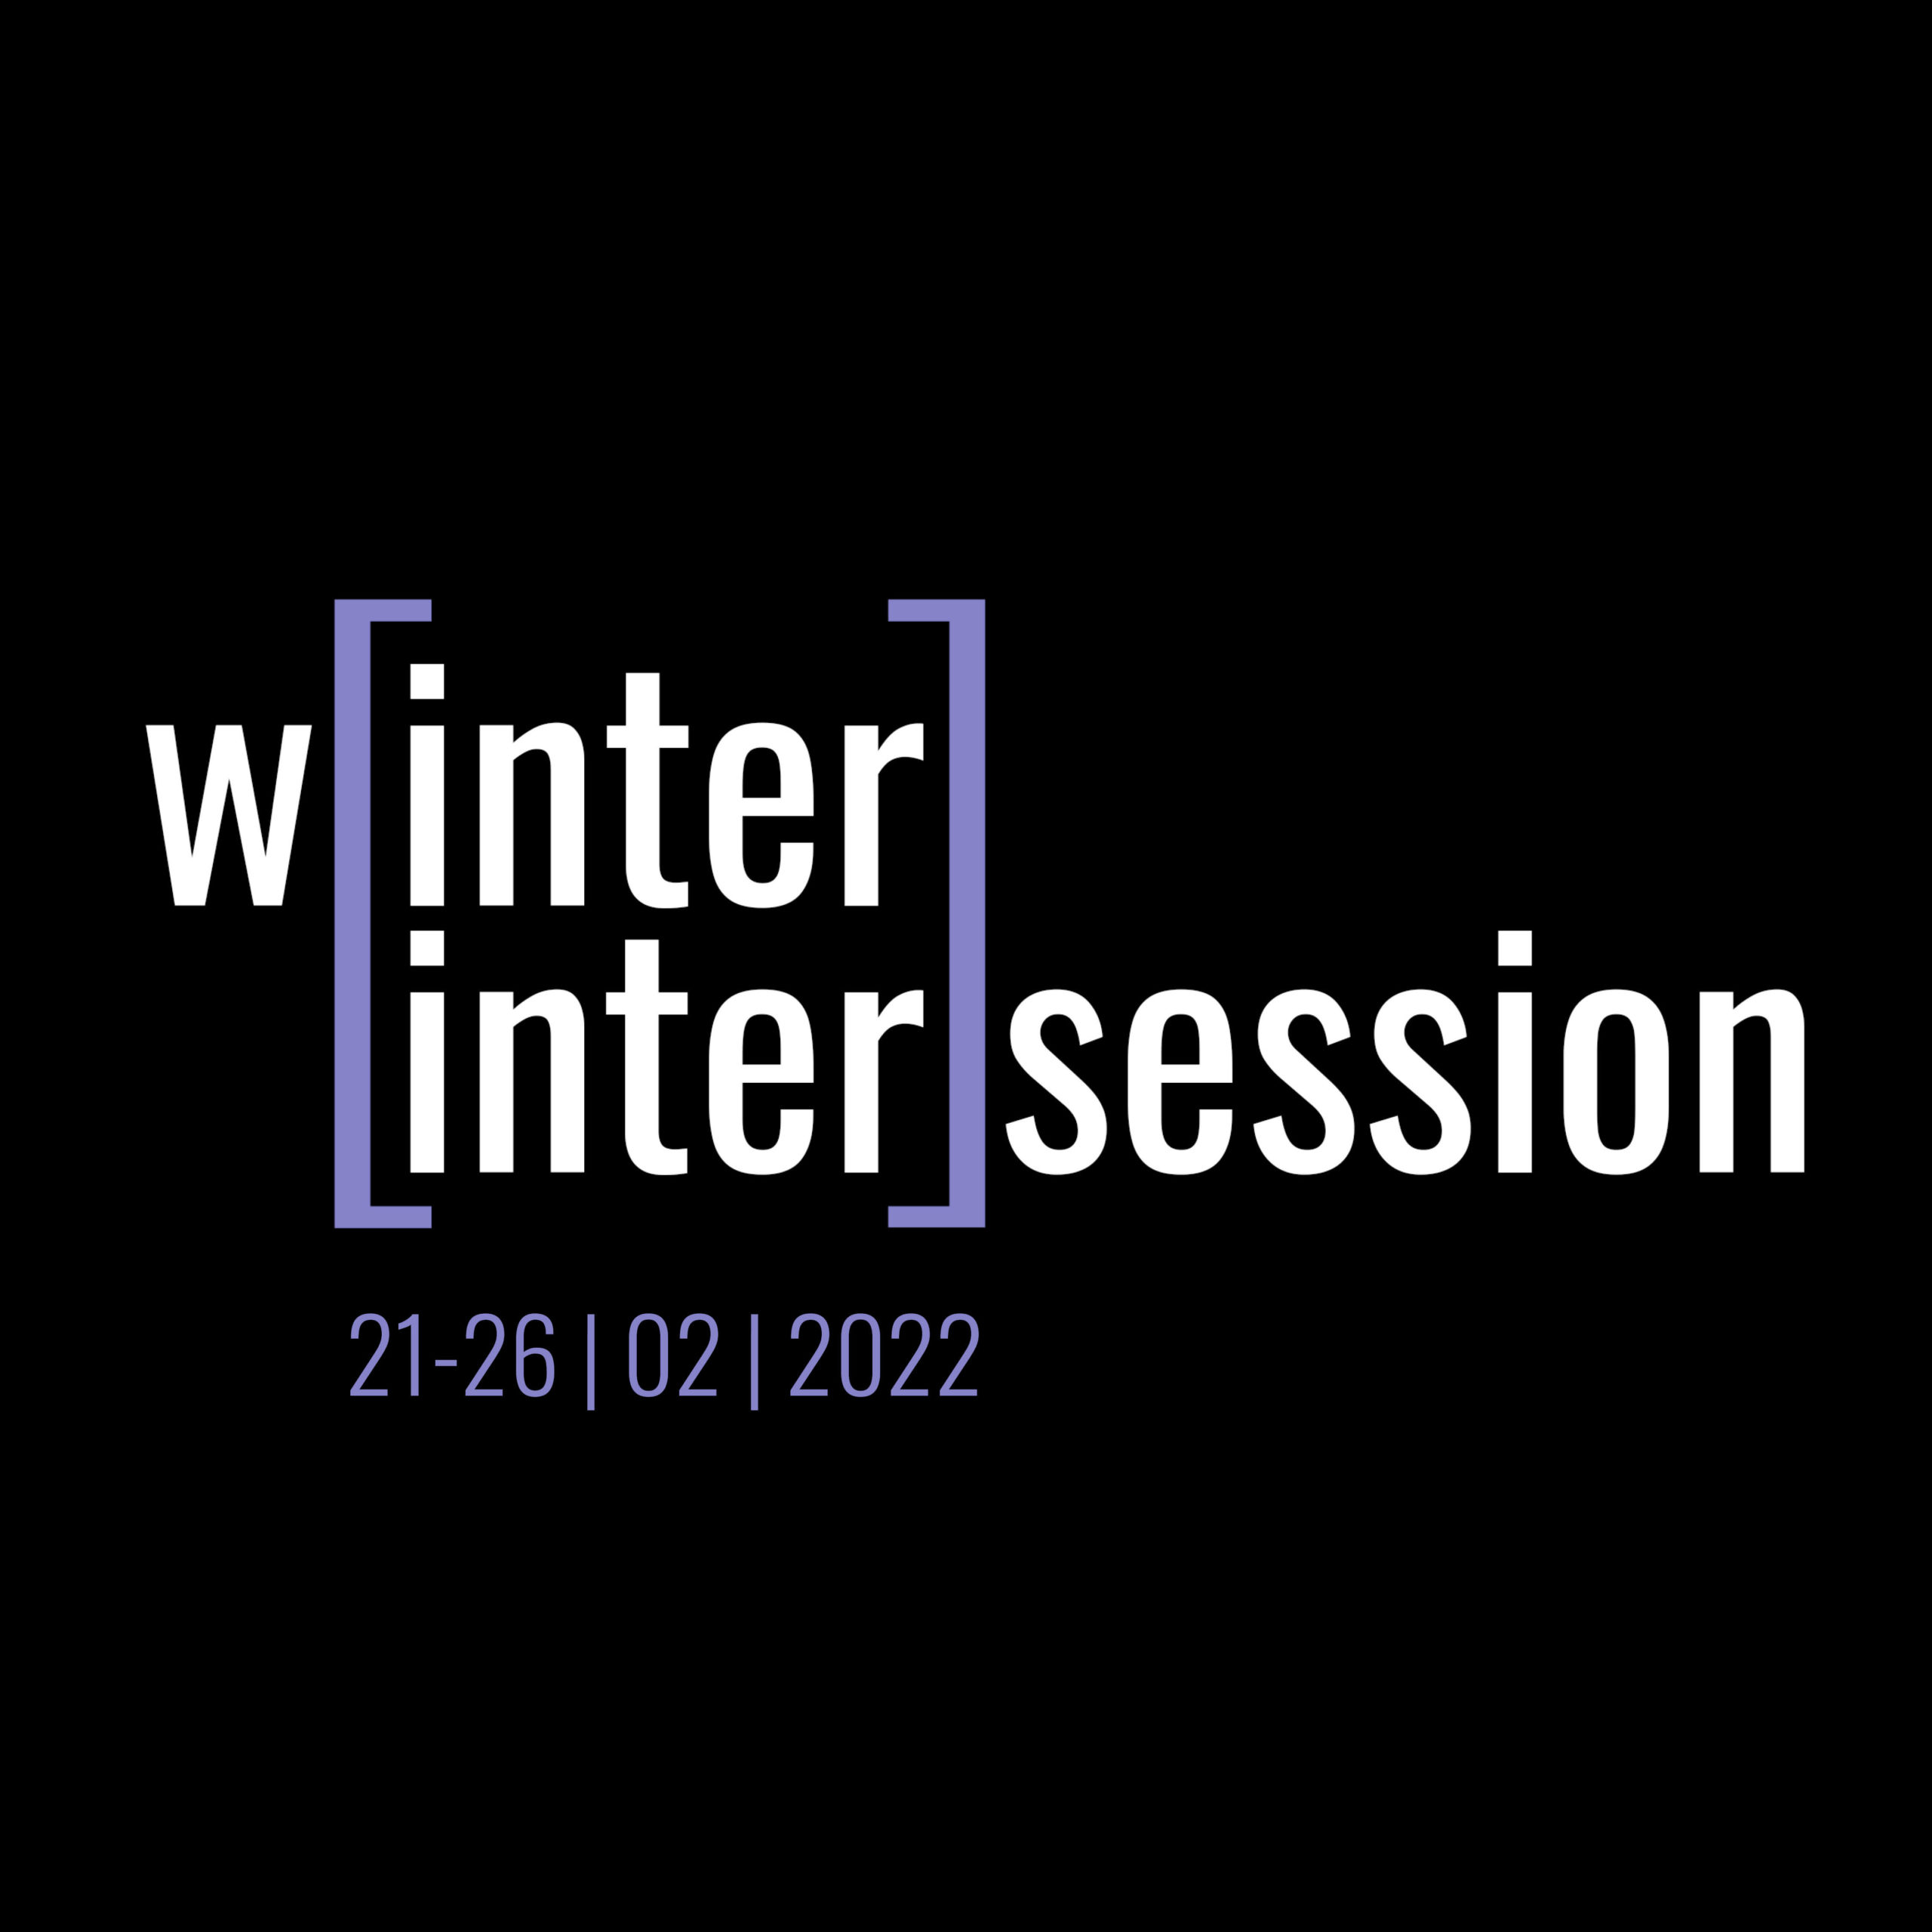 Winter intersession 2022